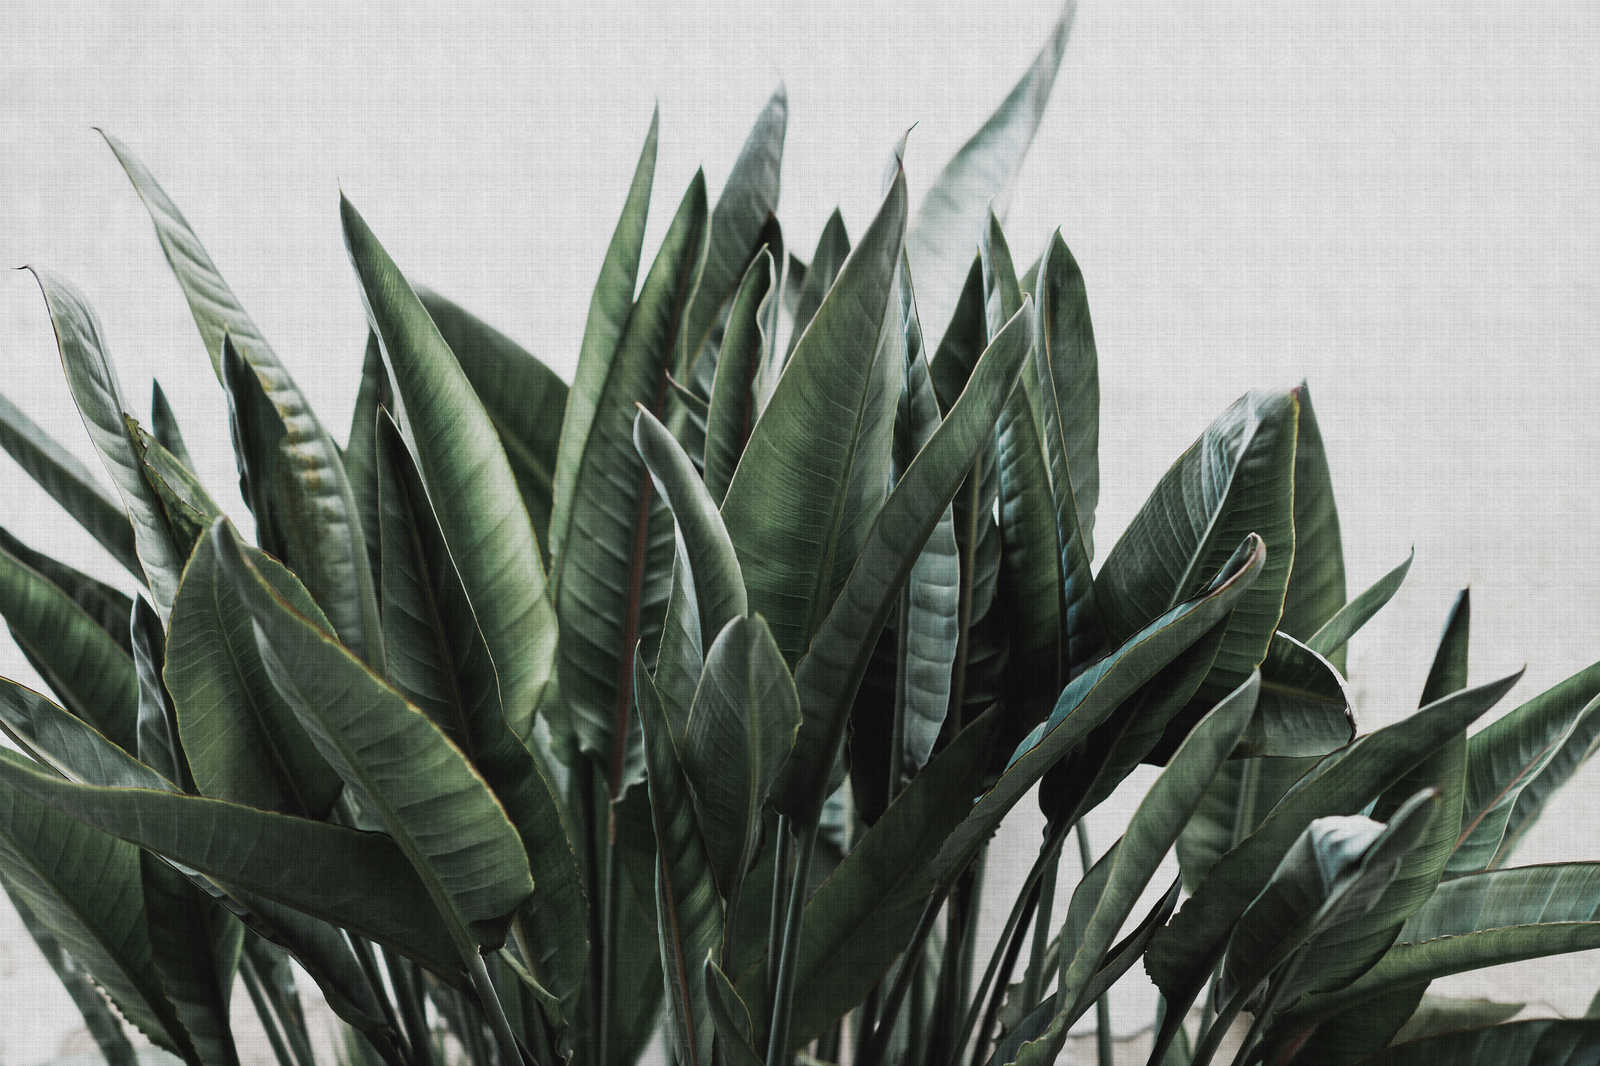             Urban jungle 2 - Palmenblätter Leinwandbild, naturleinen Struktur exotische Pflanzen – 1,20 m x 0,80 m
        